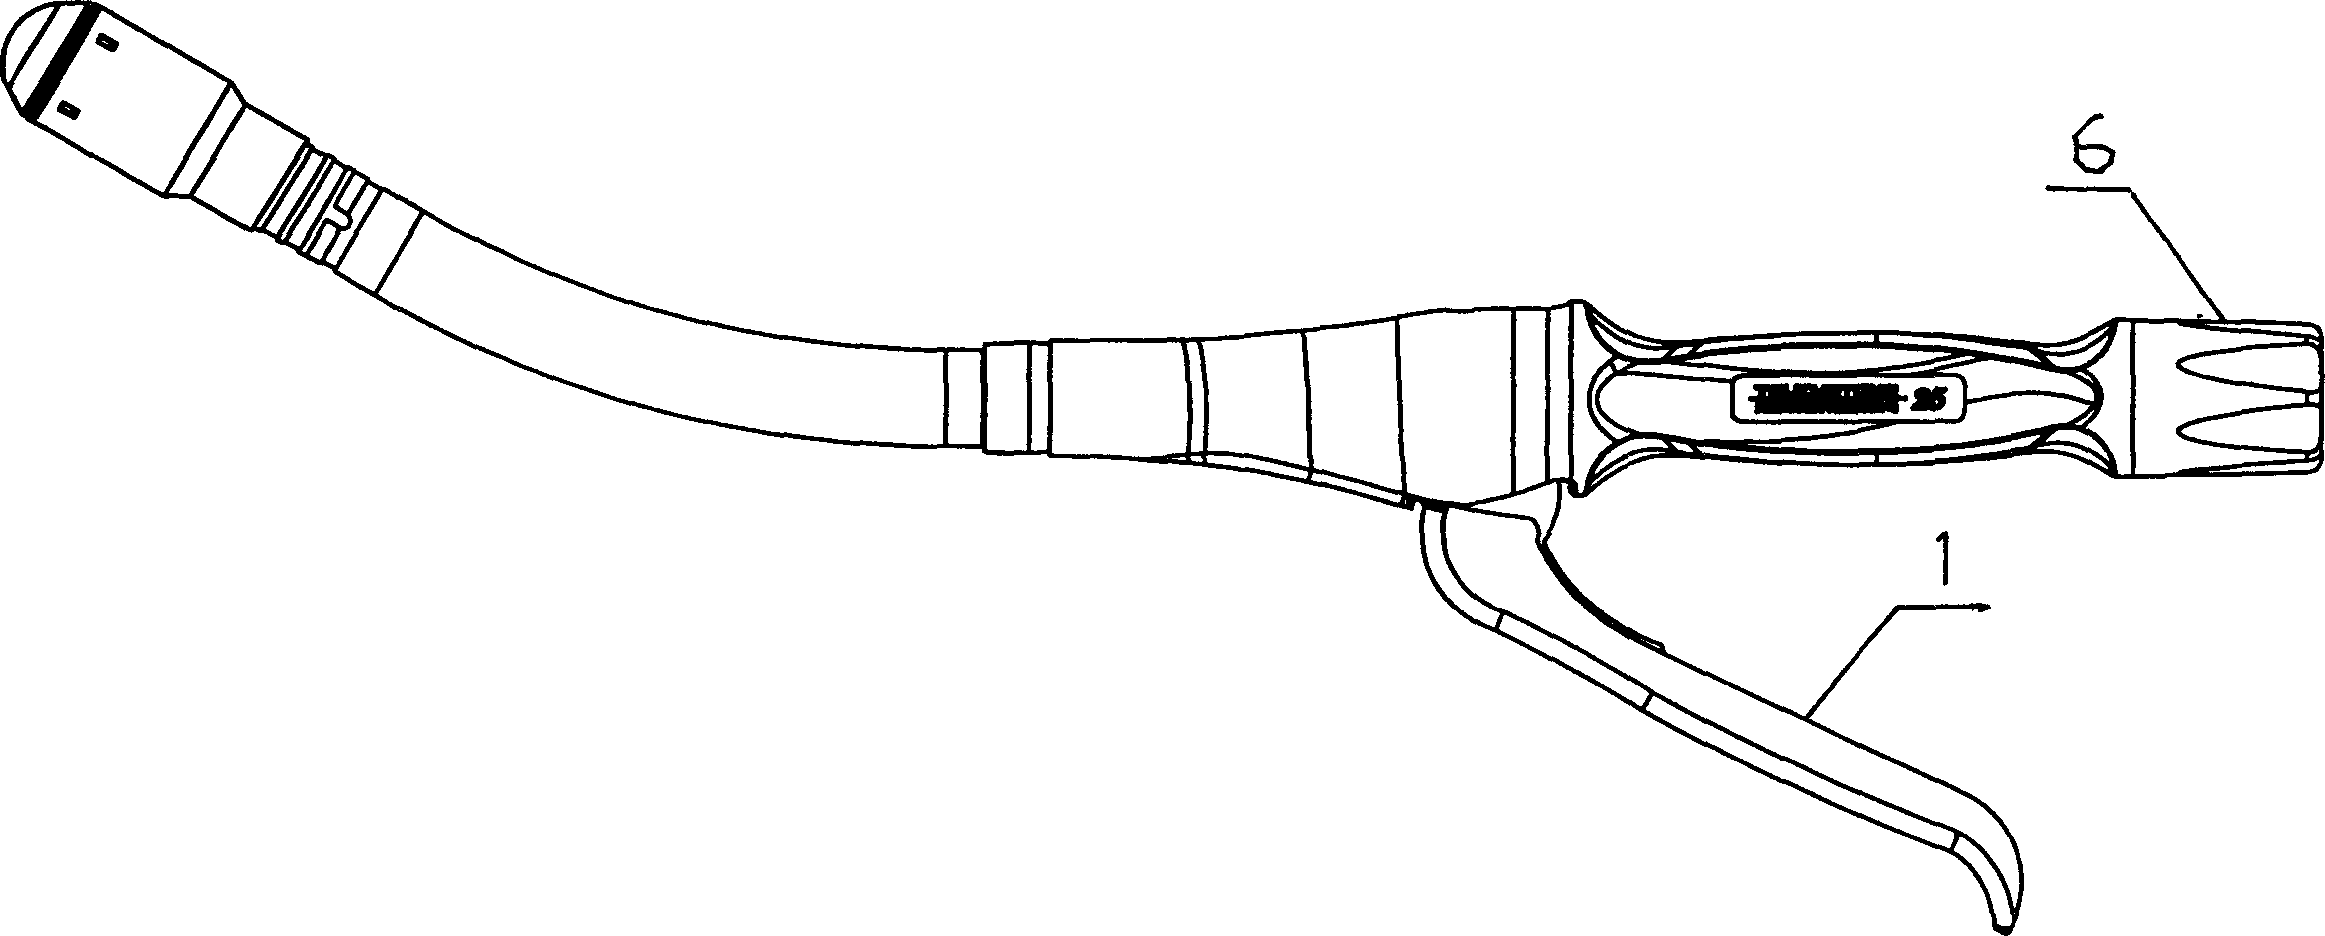 Round tubular stapler for surgical use